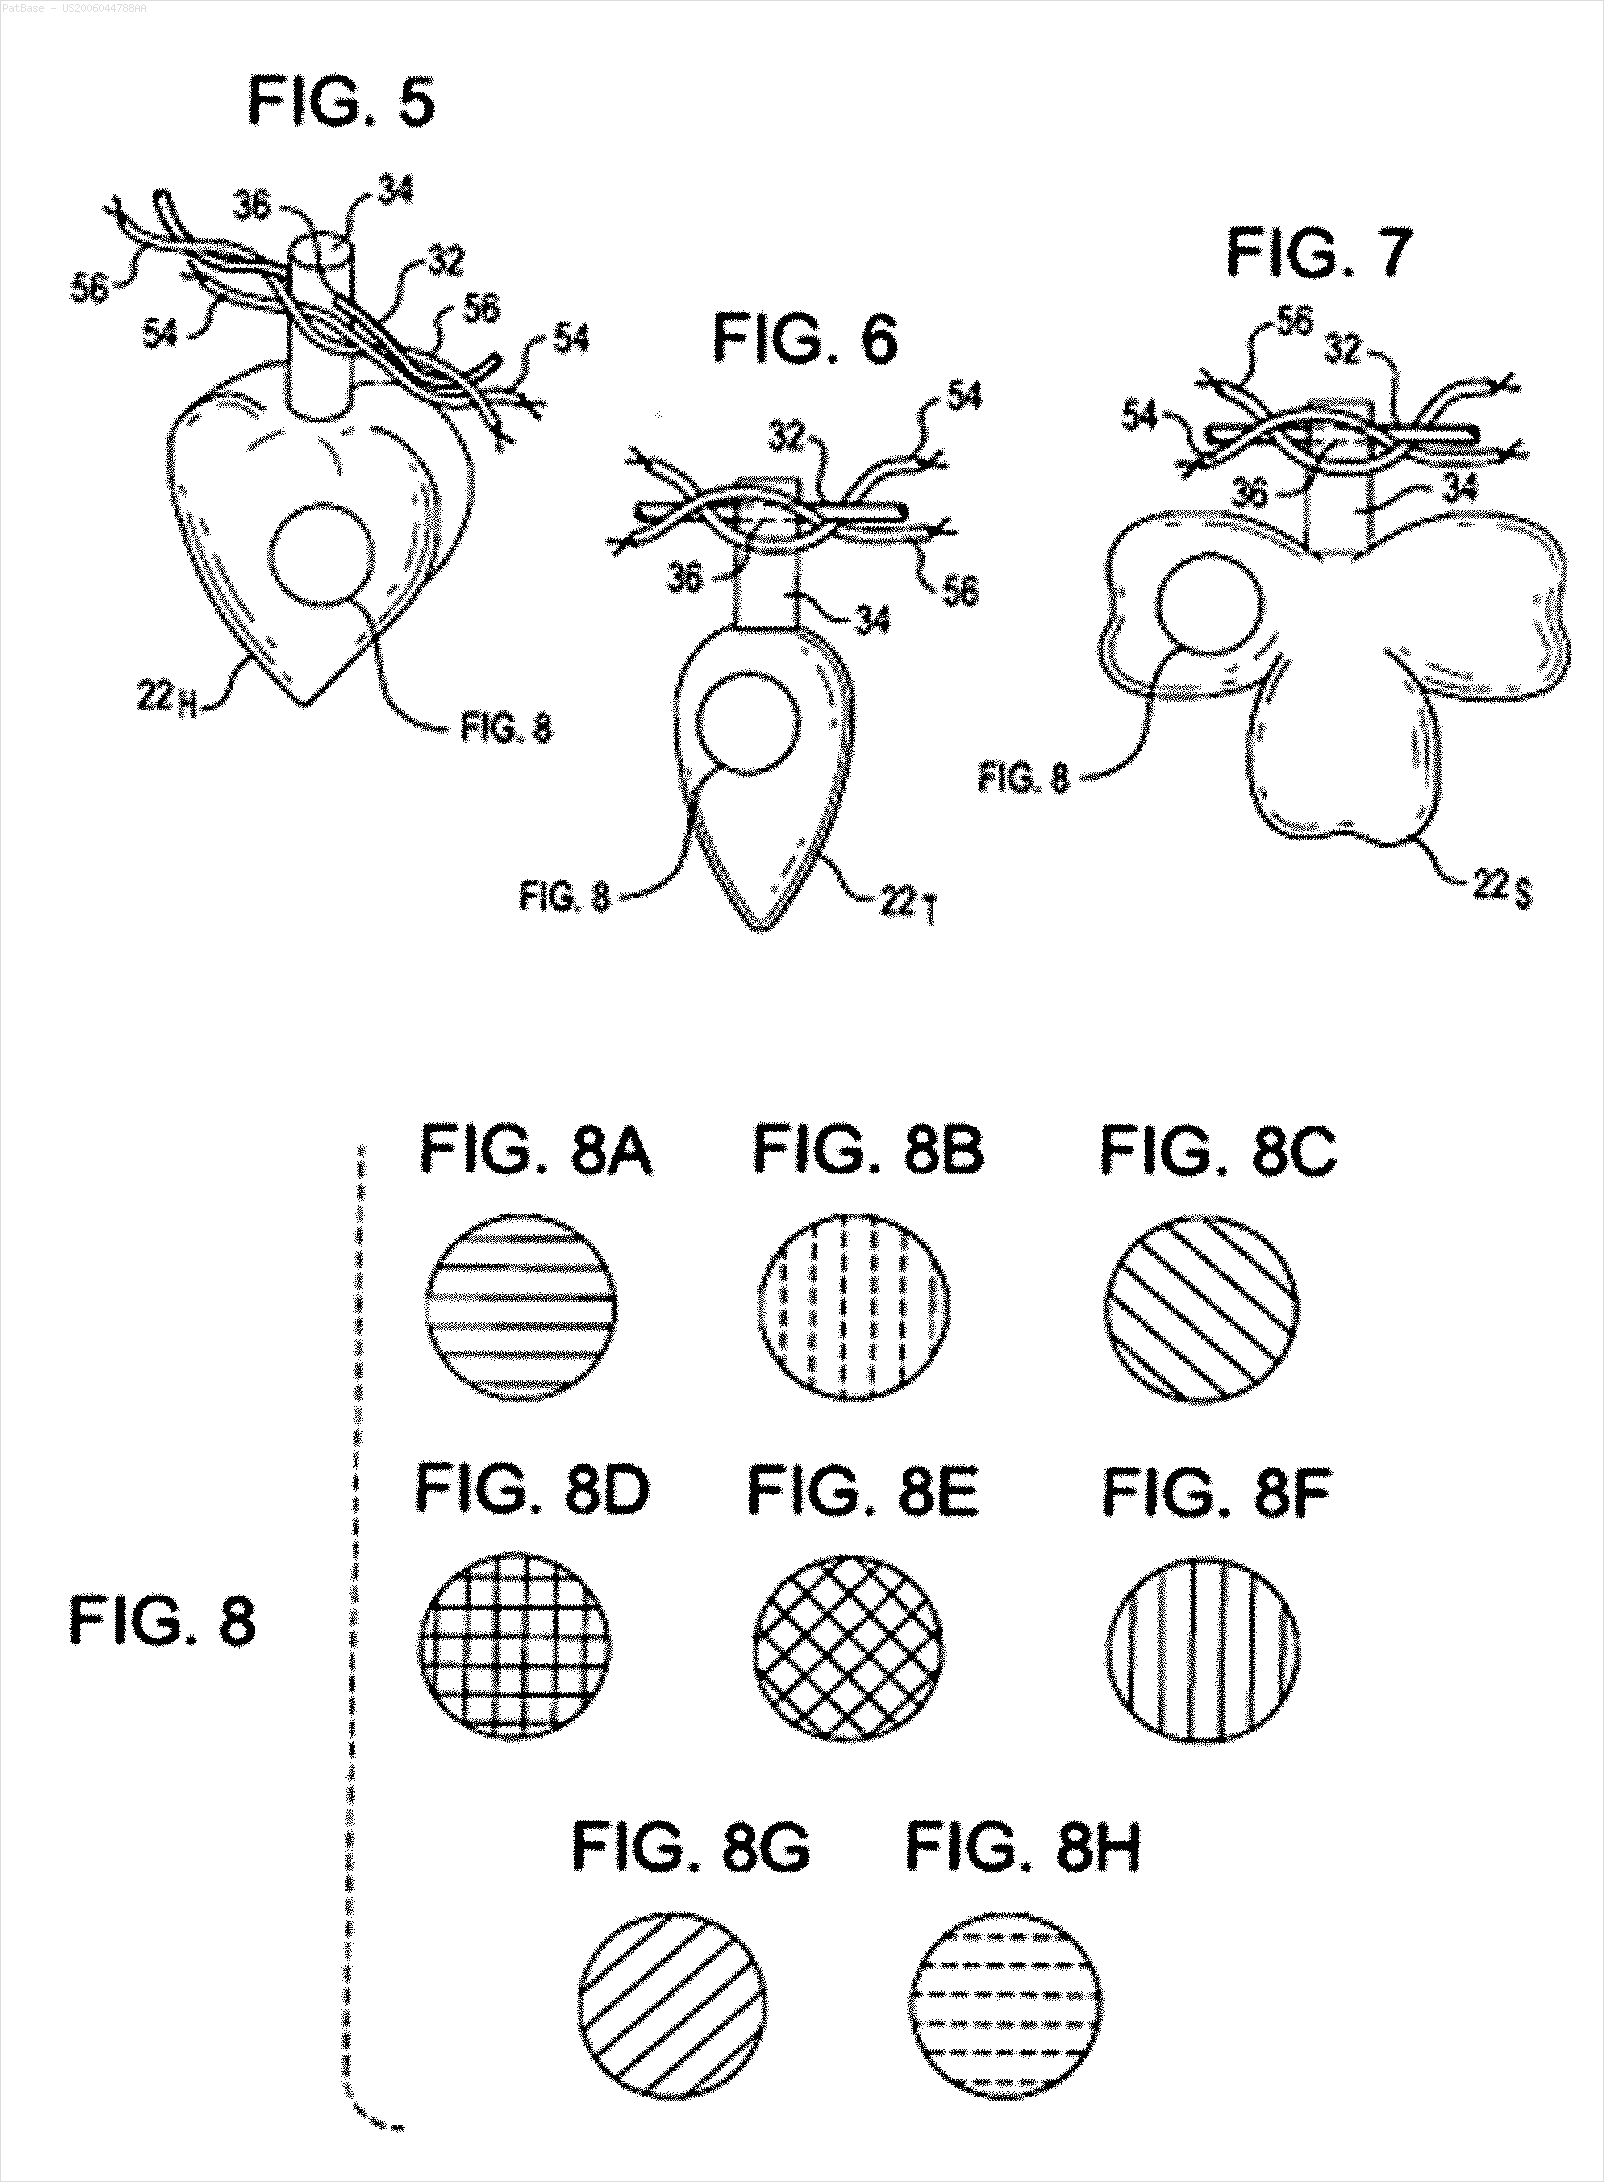 image st Patrick's day patent